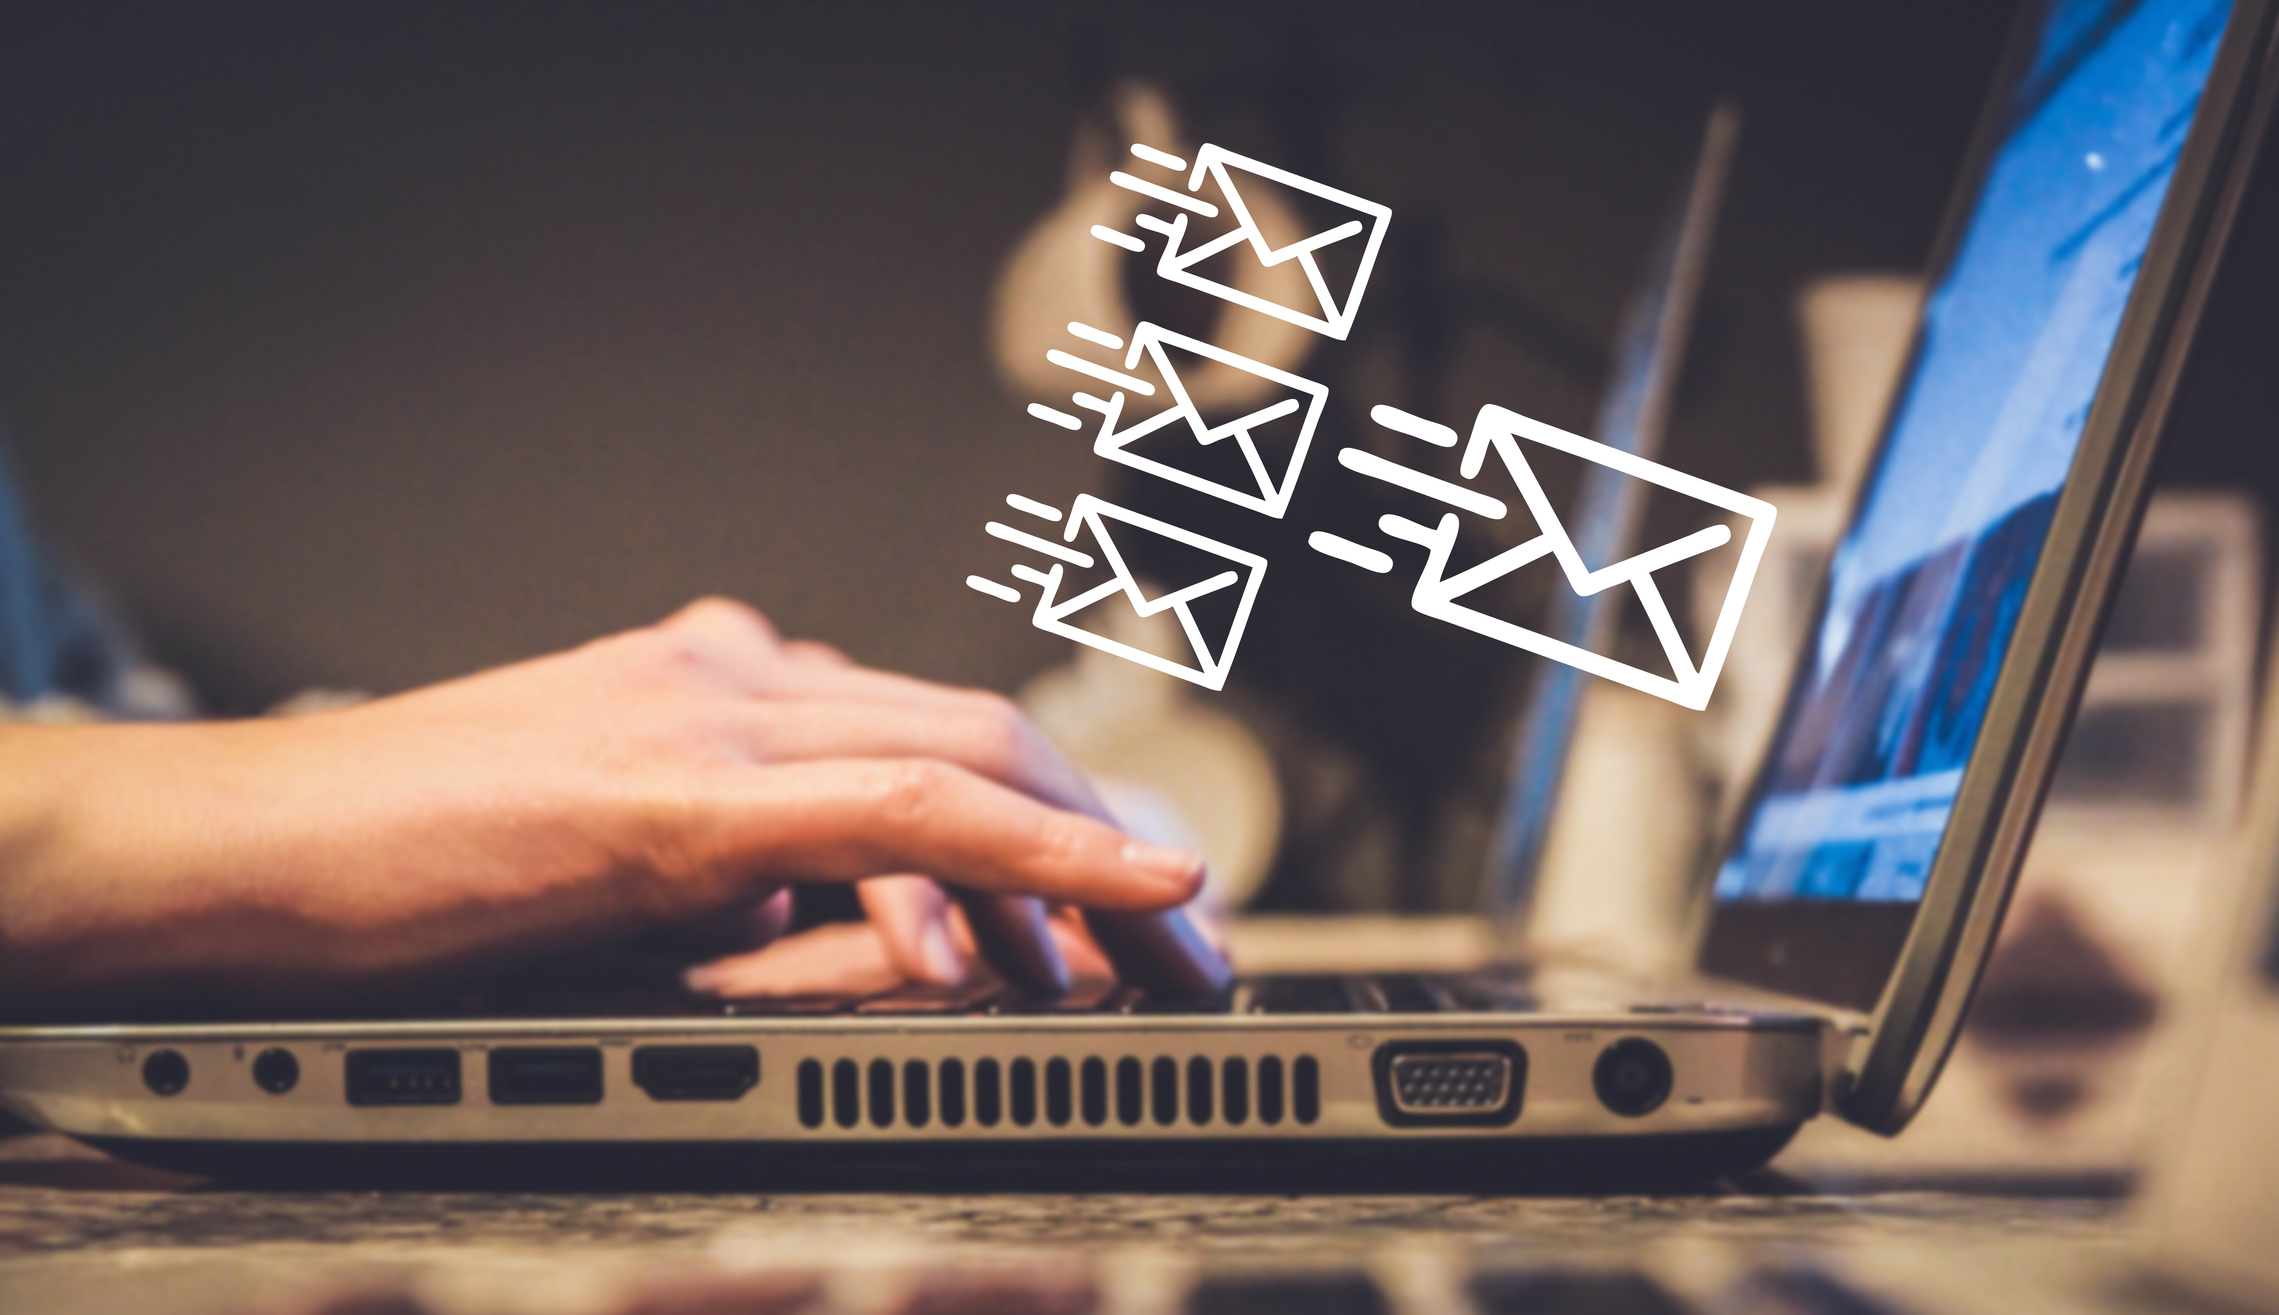 newsletter concept or email marketing image, sending e-mails